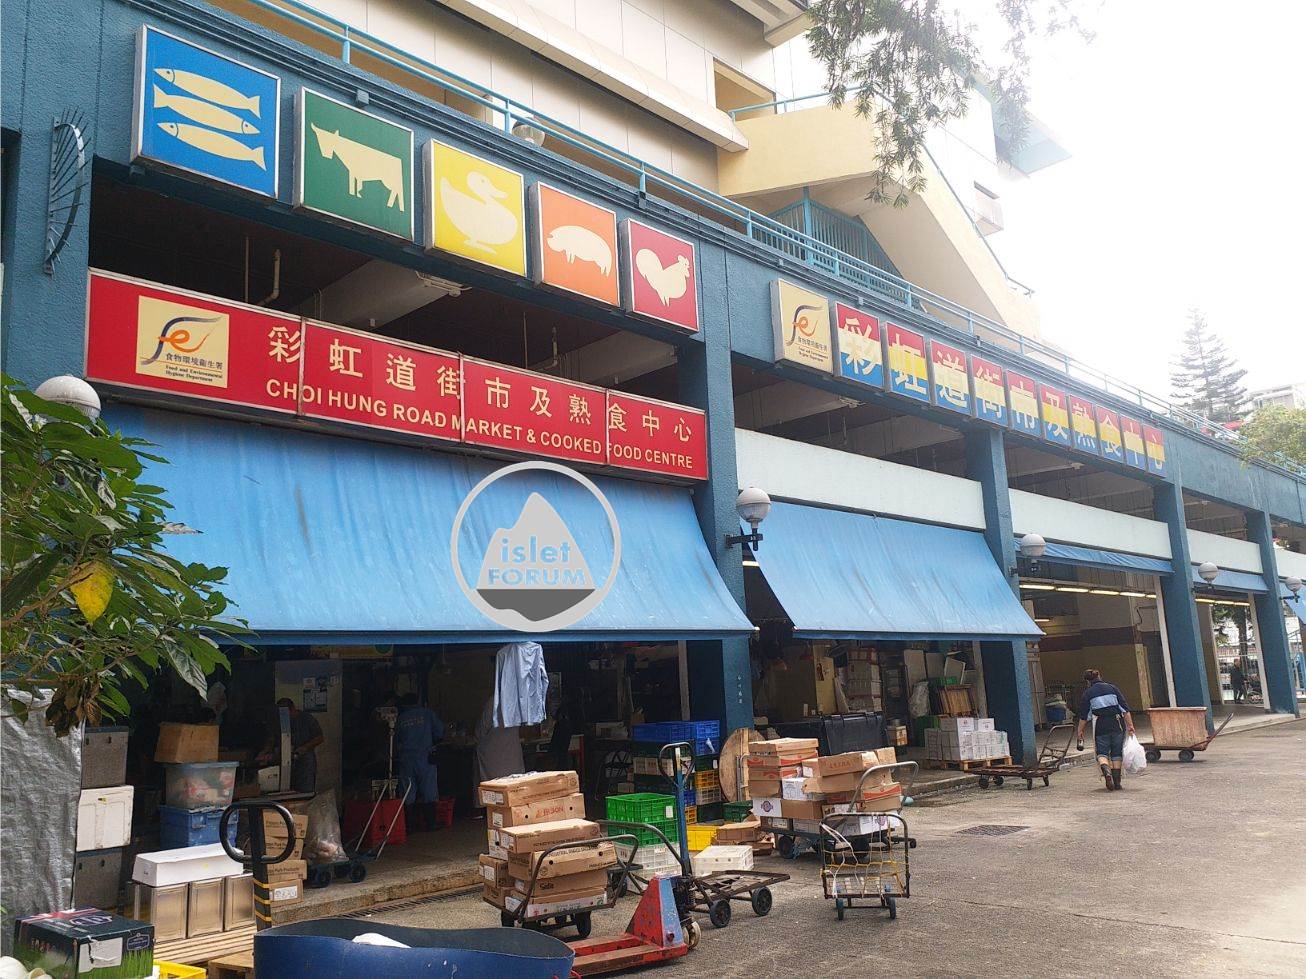 彩虹道街市choi hung road market (23).jpg